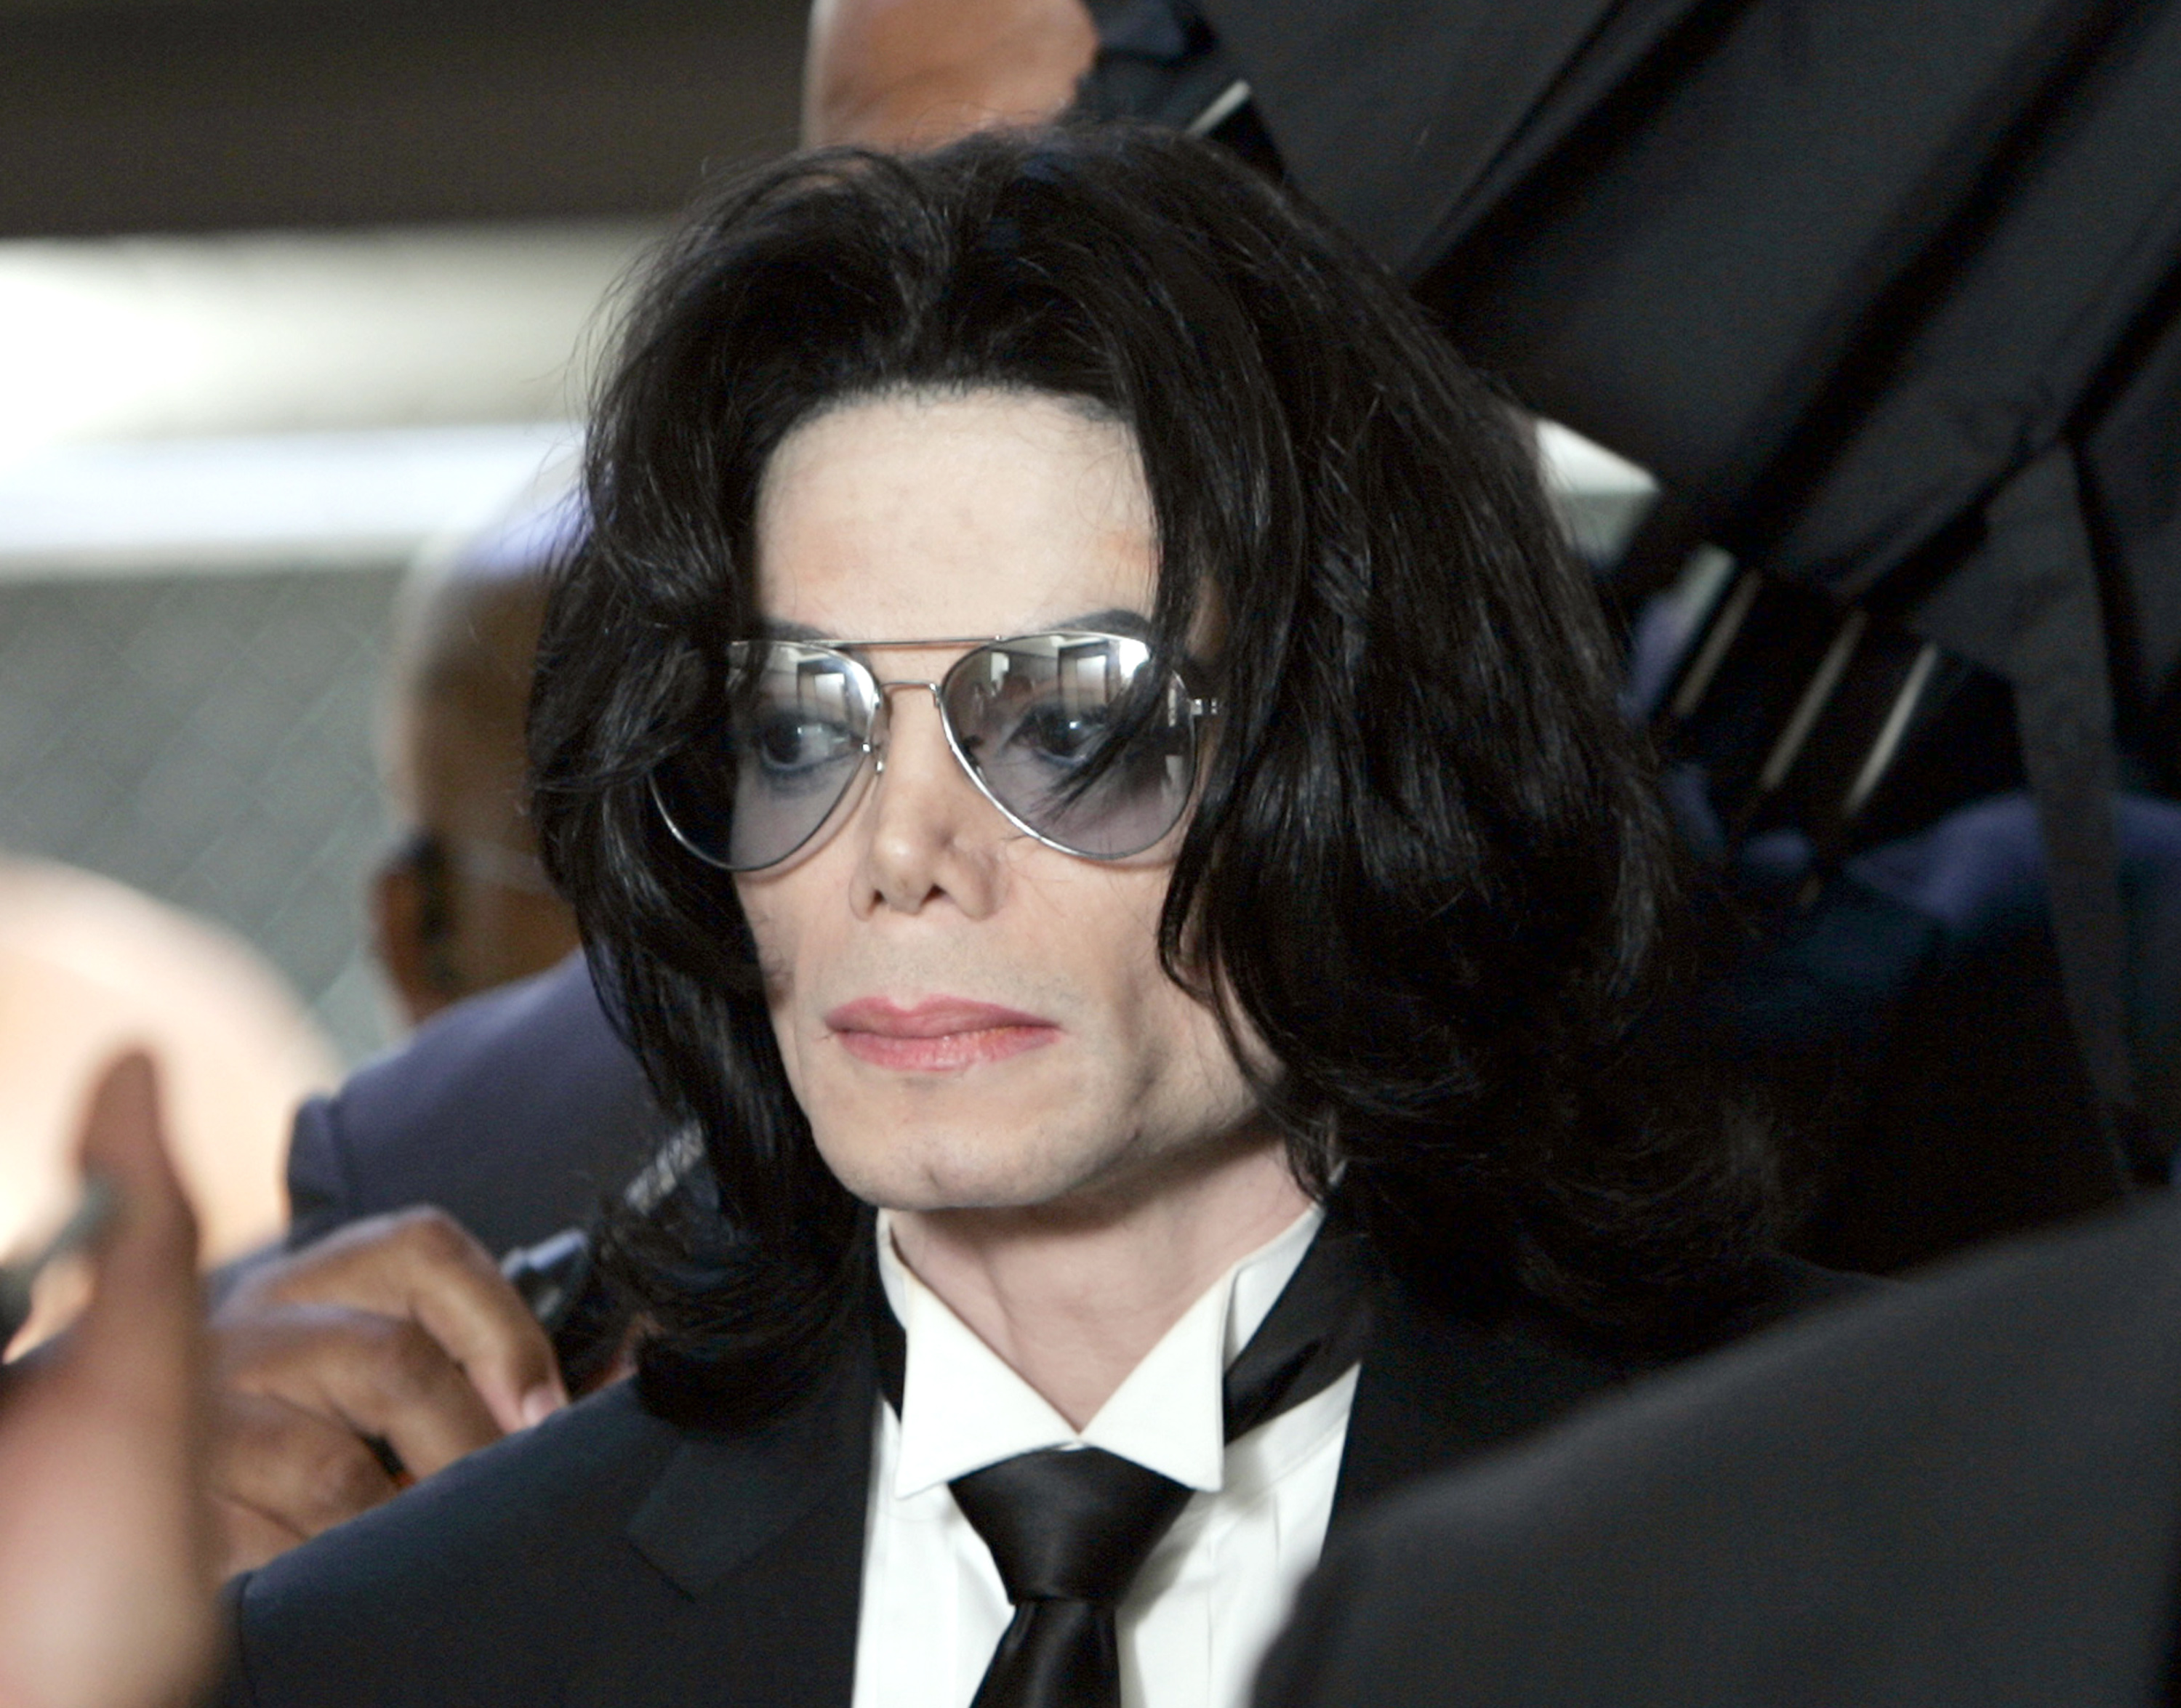 Michael Jackson's family on child porn stash: Reports are 'false'